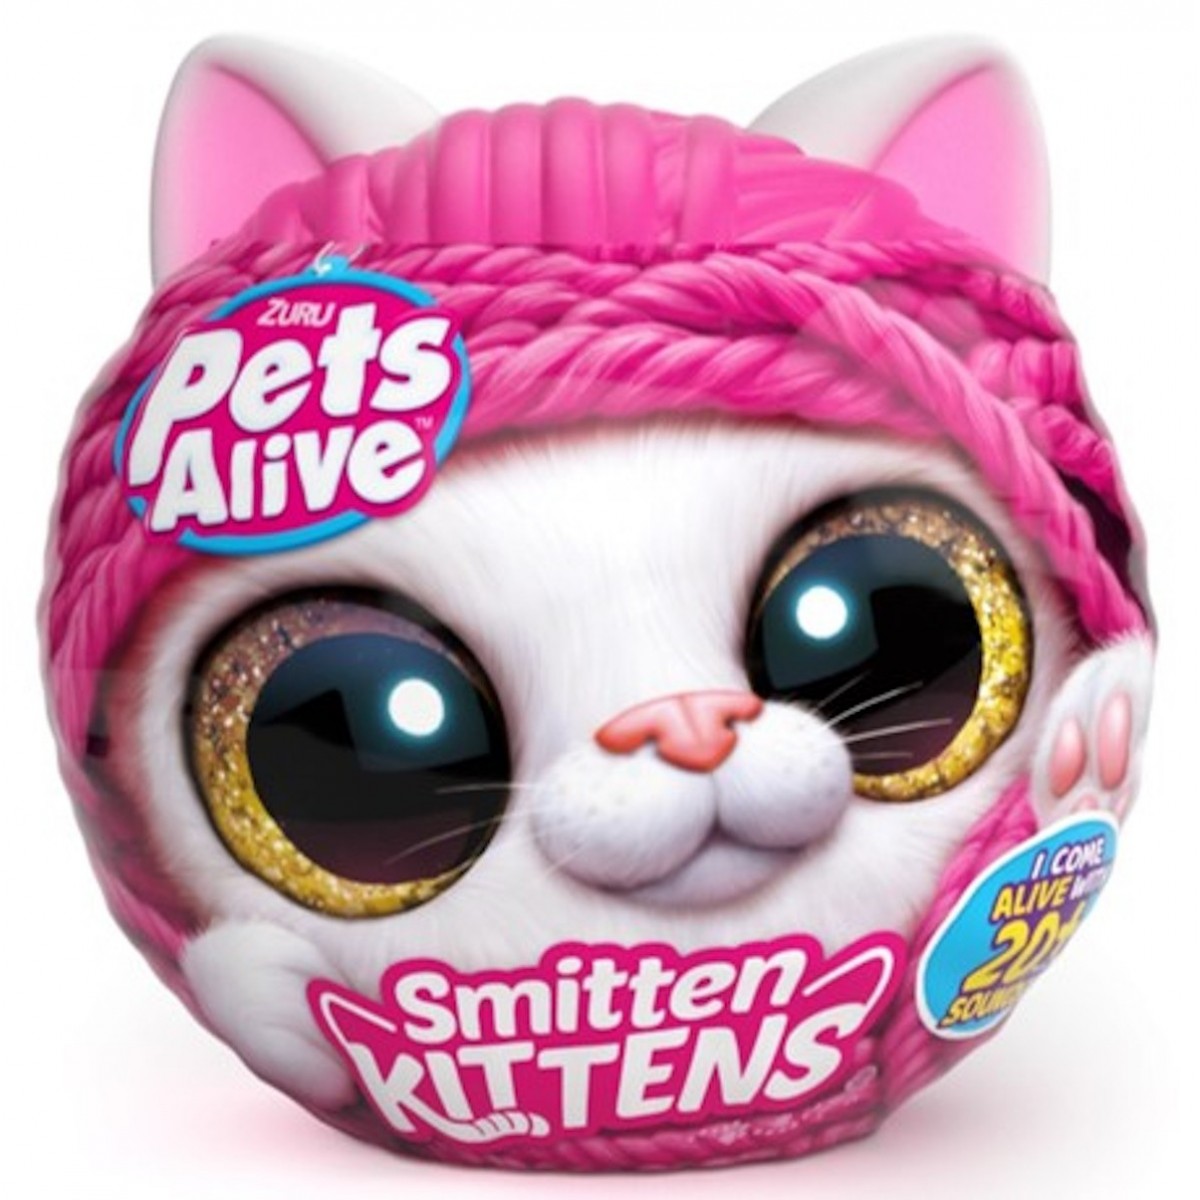 Pets Alive - Smitten Kitten